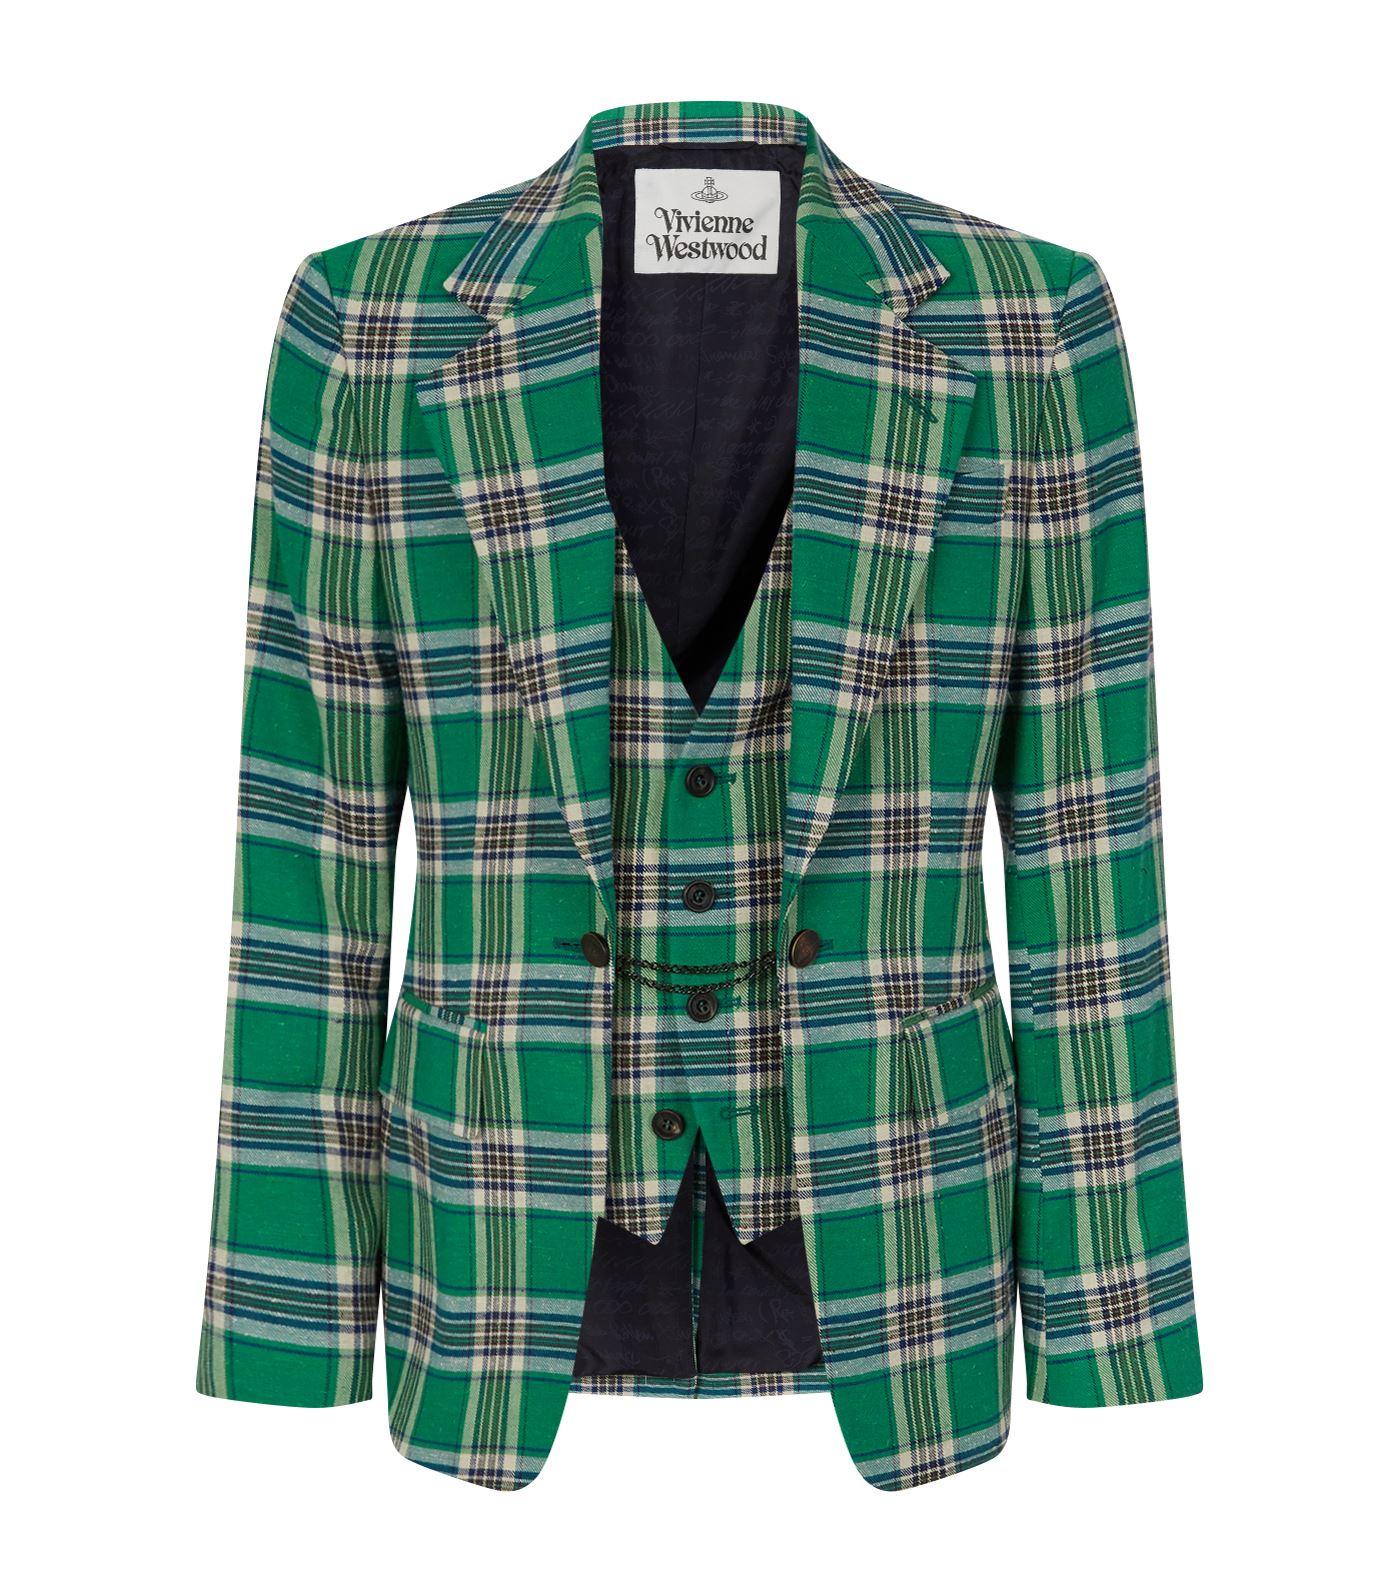 Vivienne Westwood Brushed Cotton Tartan Blazer in Green for Men - Lyst